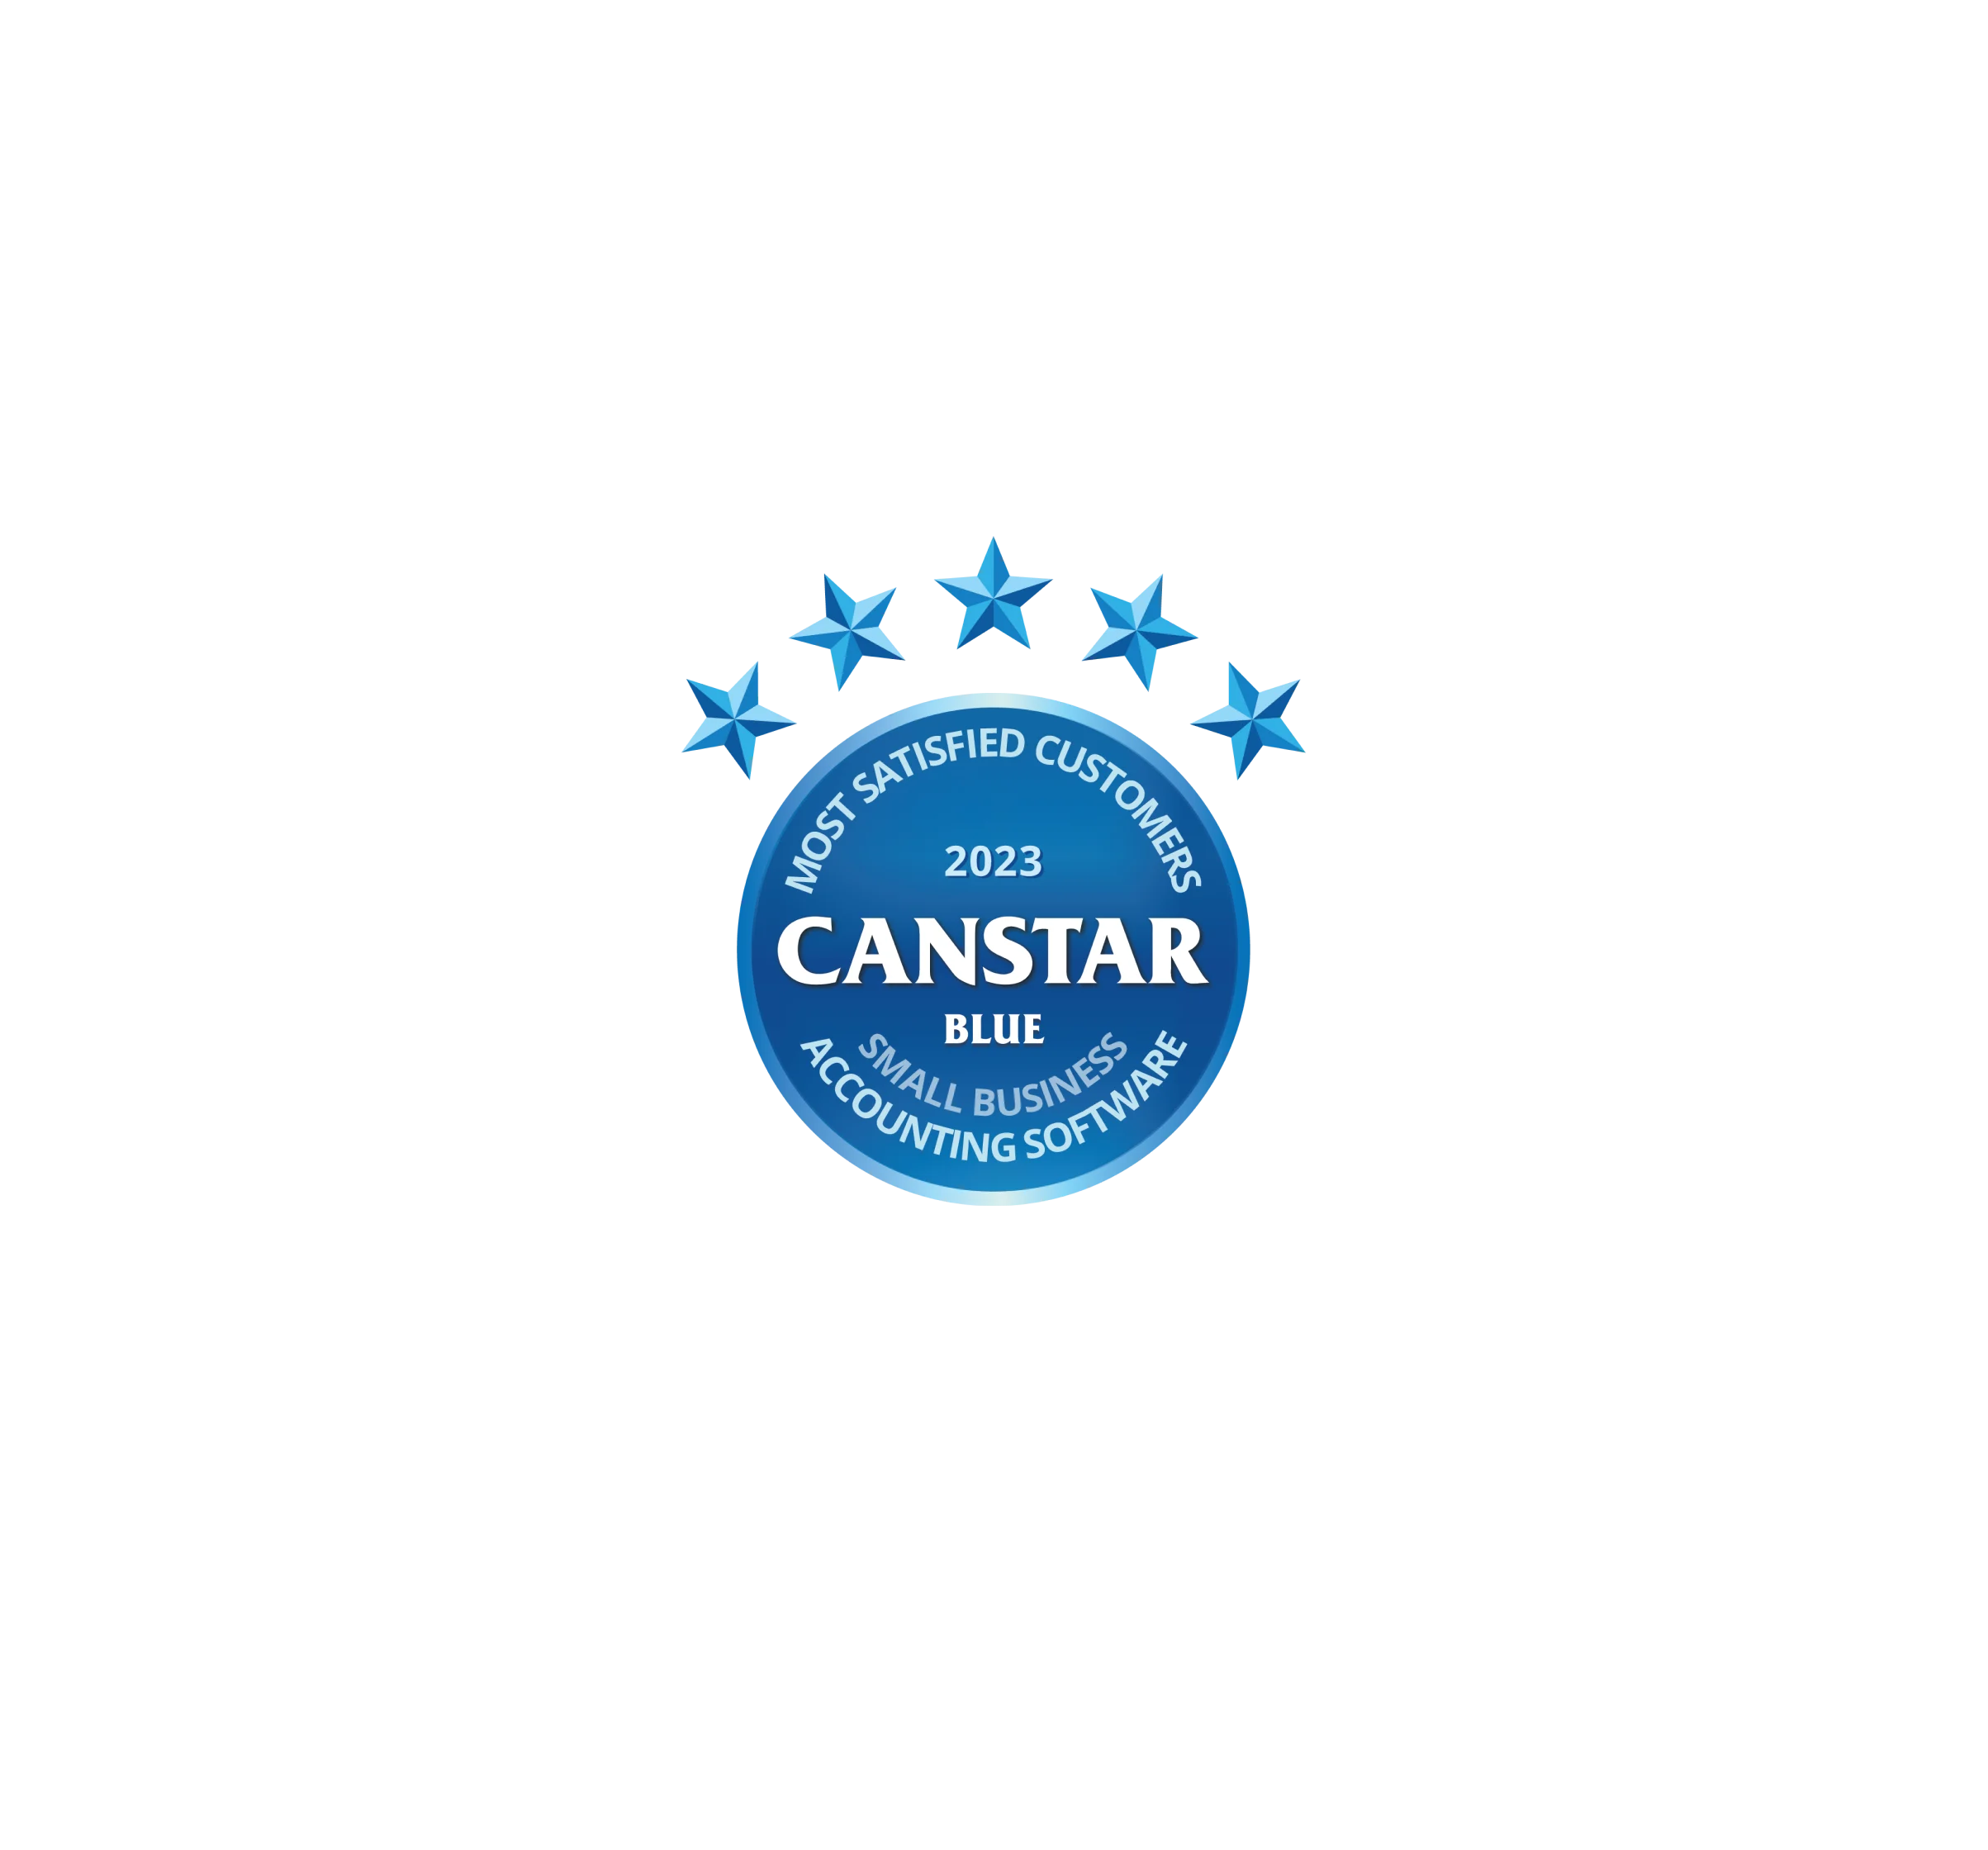 Canstar Blue Award 2023